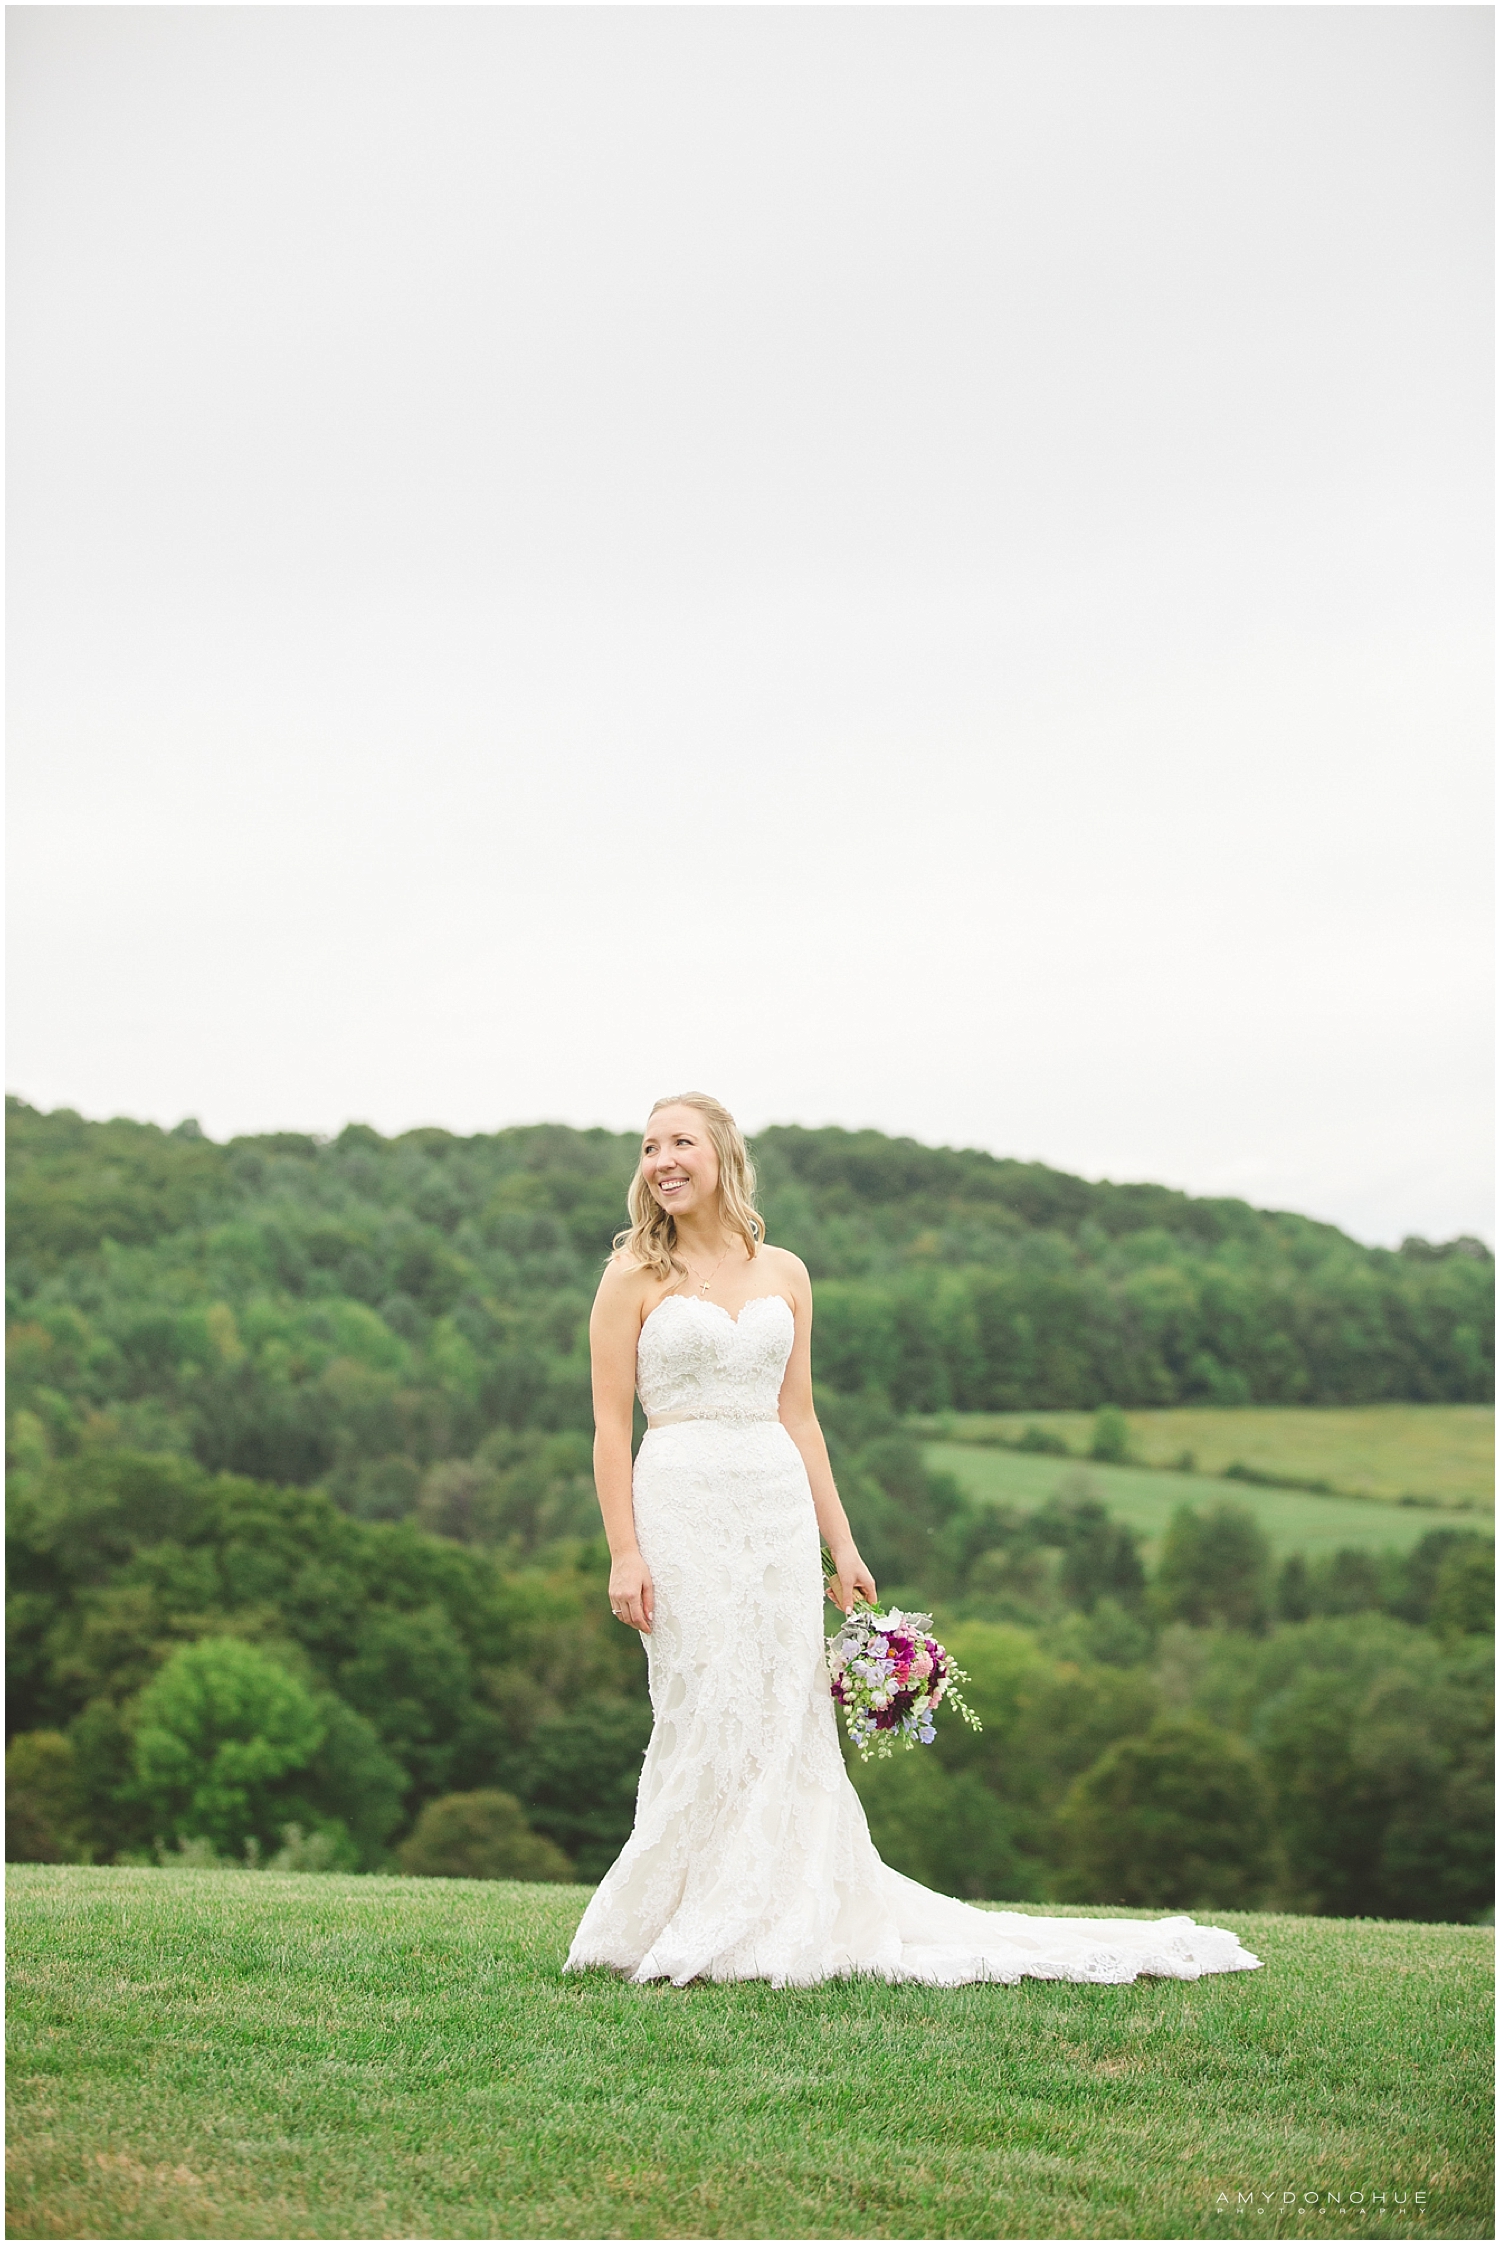 Professional Photography Vermont | Vermont Wedding Photography | Amy Donohue Photography